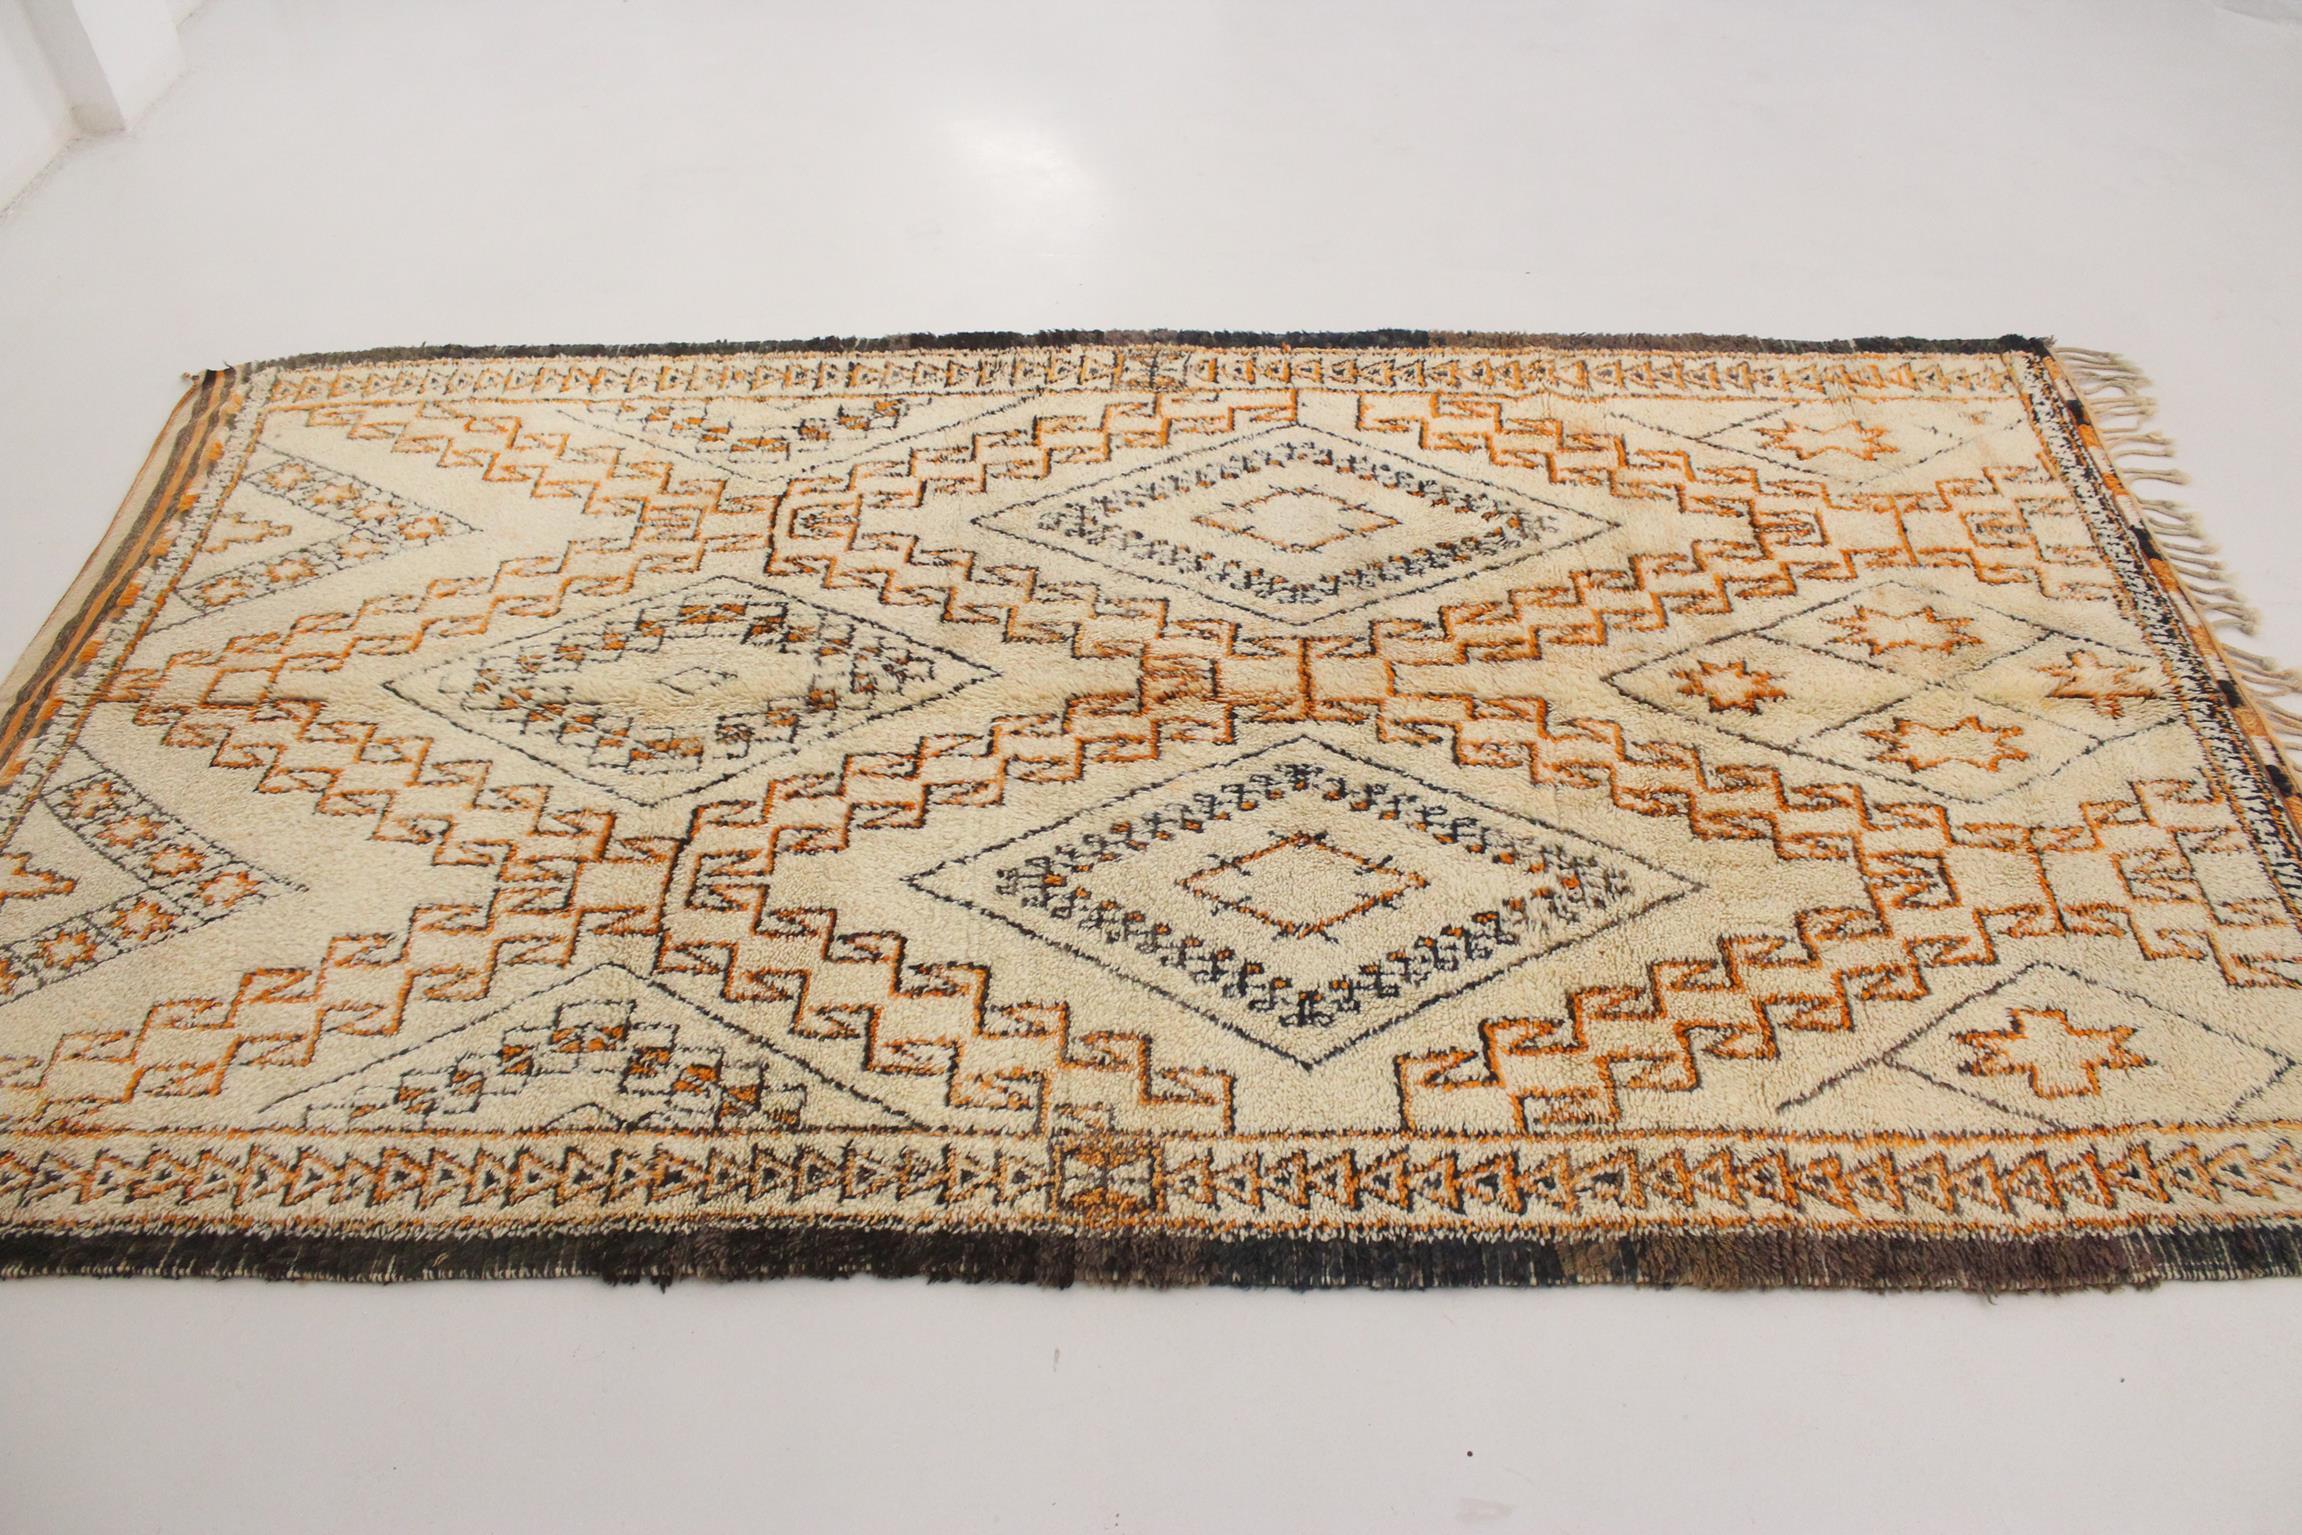 Hand-Woven Vintage Moroccan Beni Ourain rug - Beige/orange - 6.2x11.1feet / 190x340cm For Sale